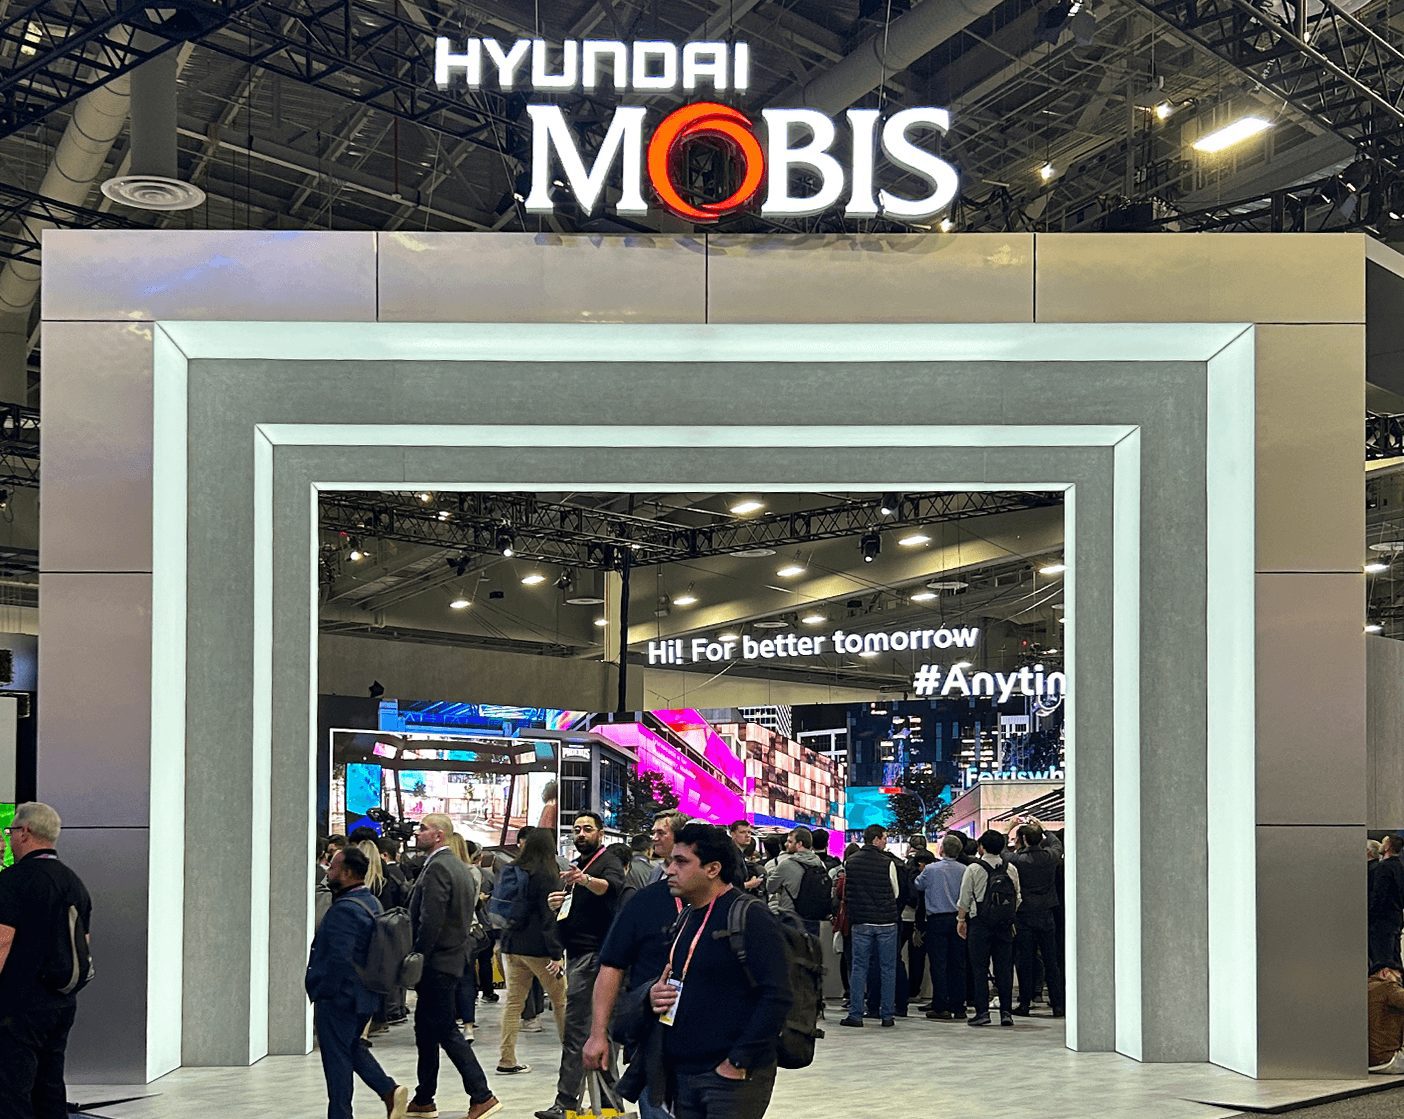 The entrance to Hyundai Mobis' exhibit